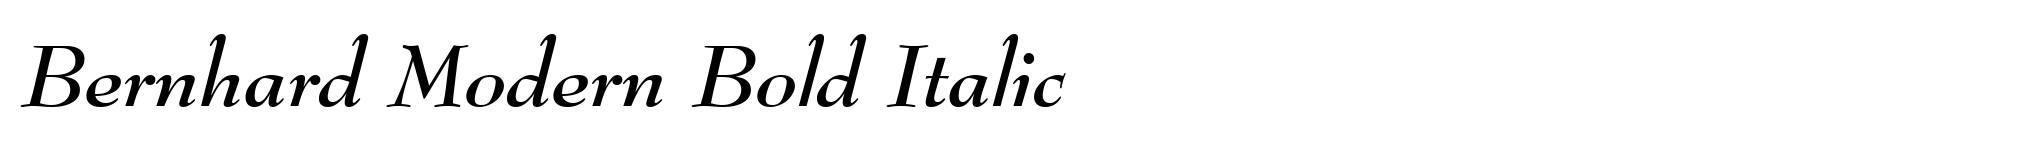 Bernhard Modern Bold Italic image